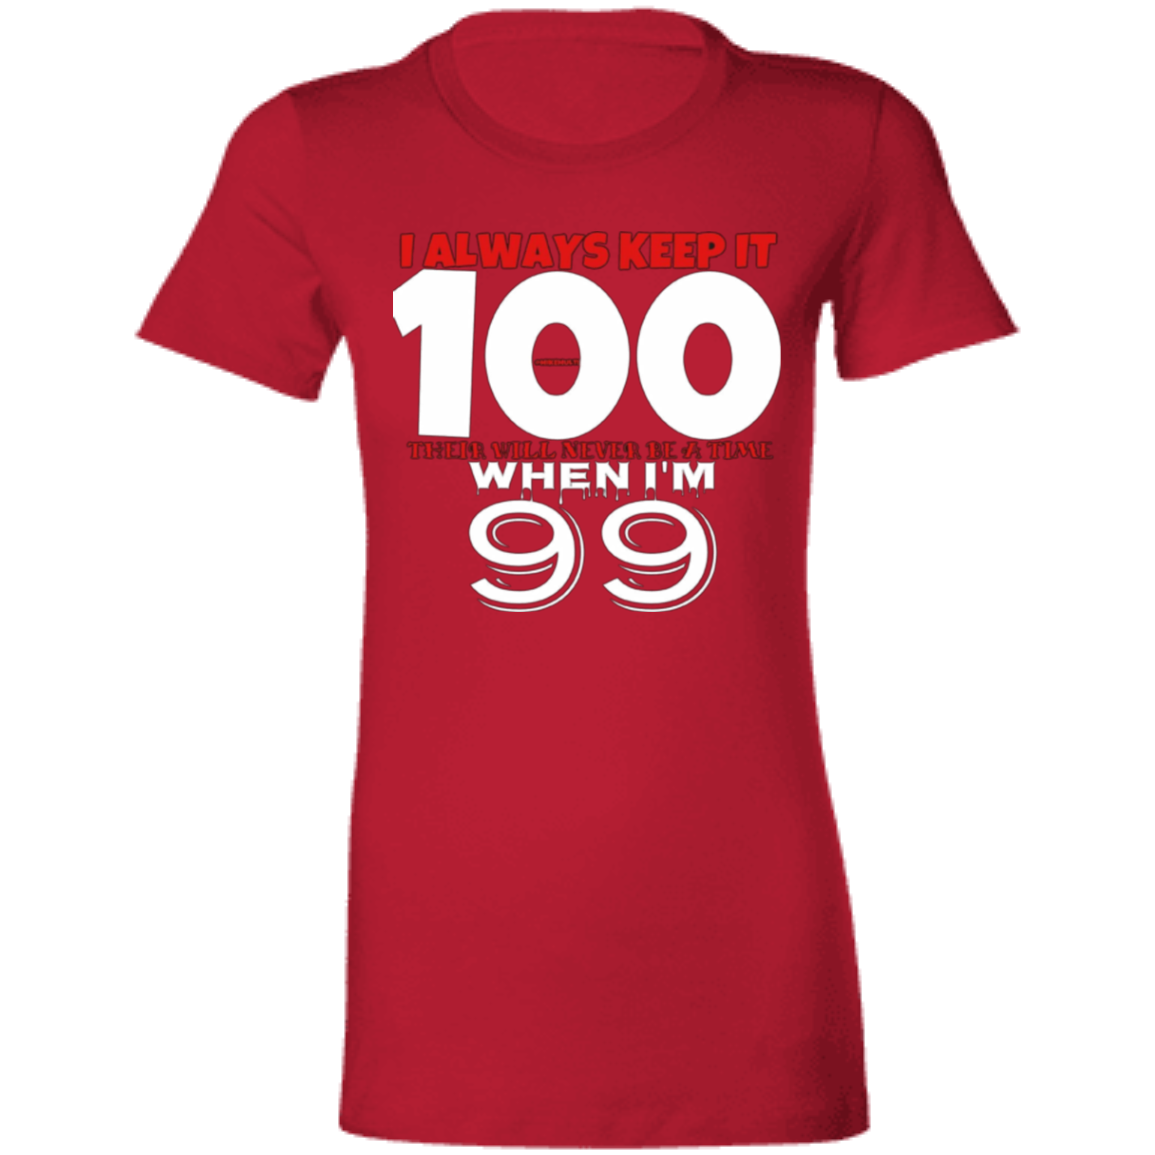 I Always Keep It 100 - Ladies' Favorite T-Shirt